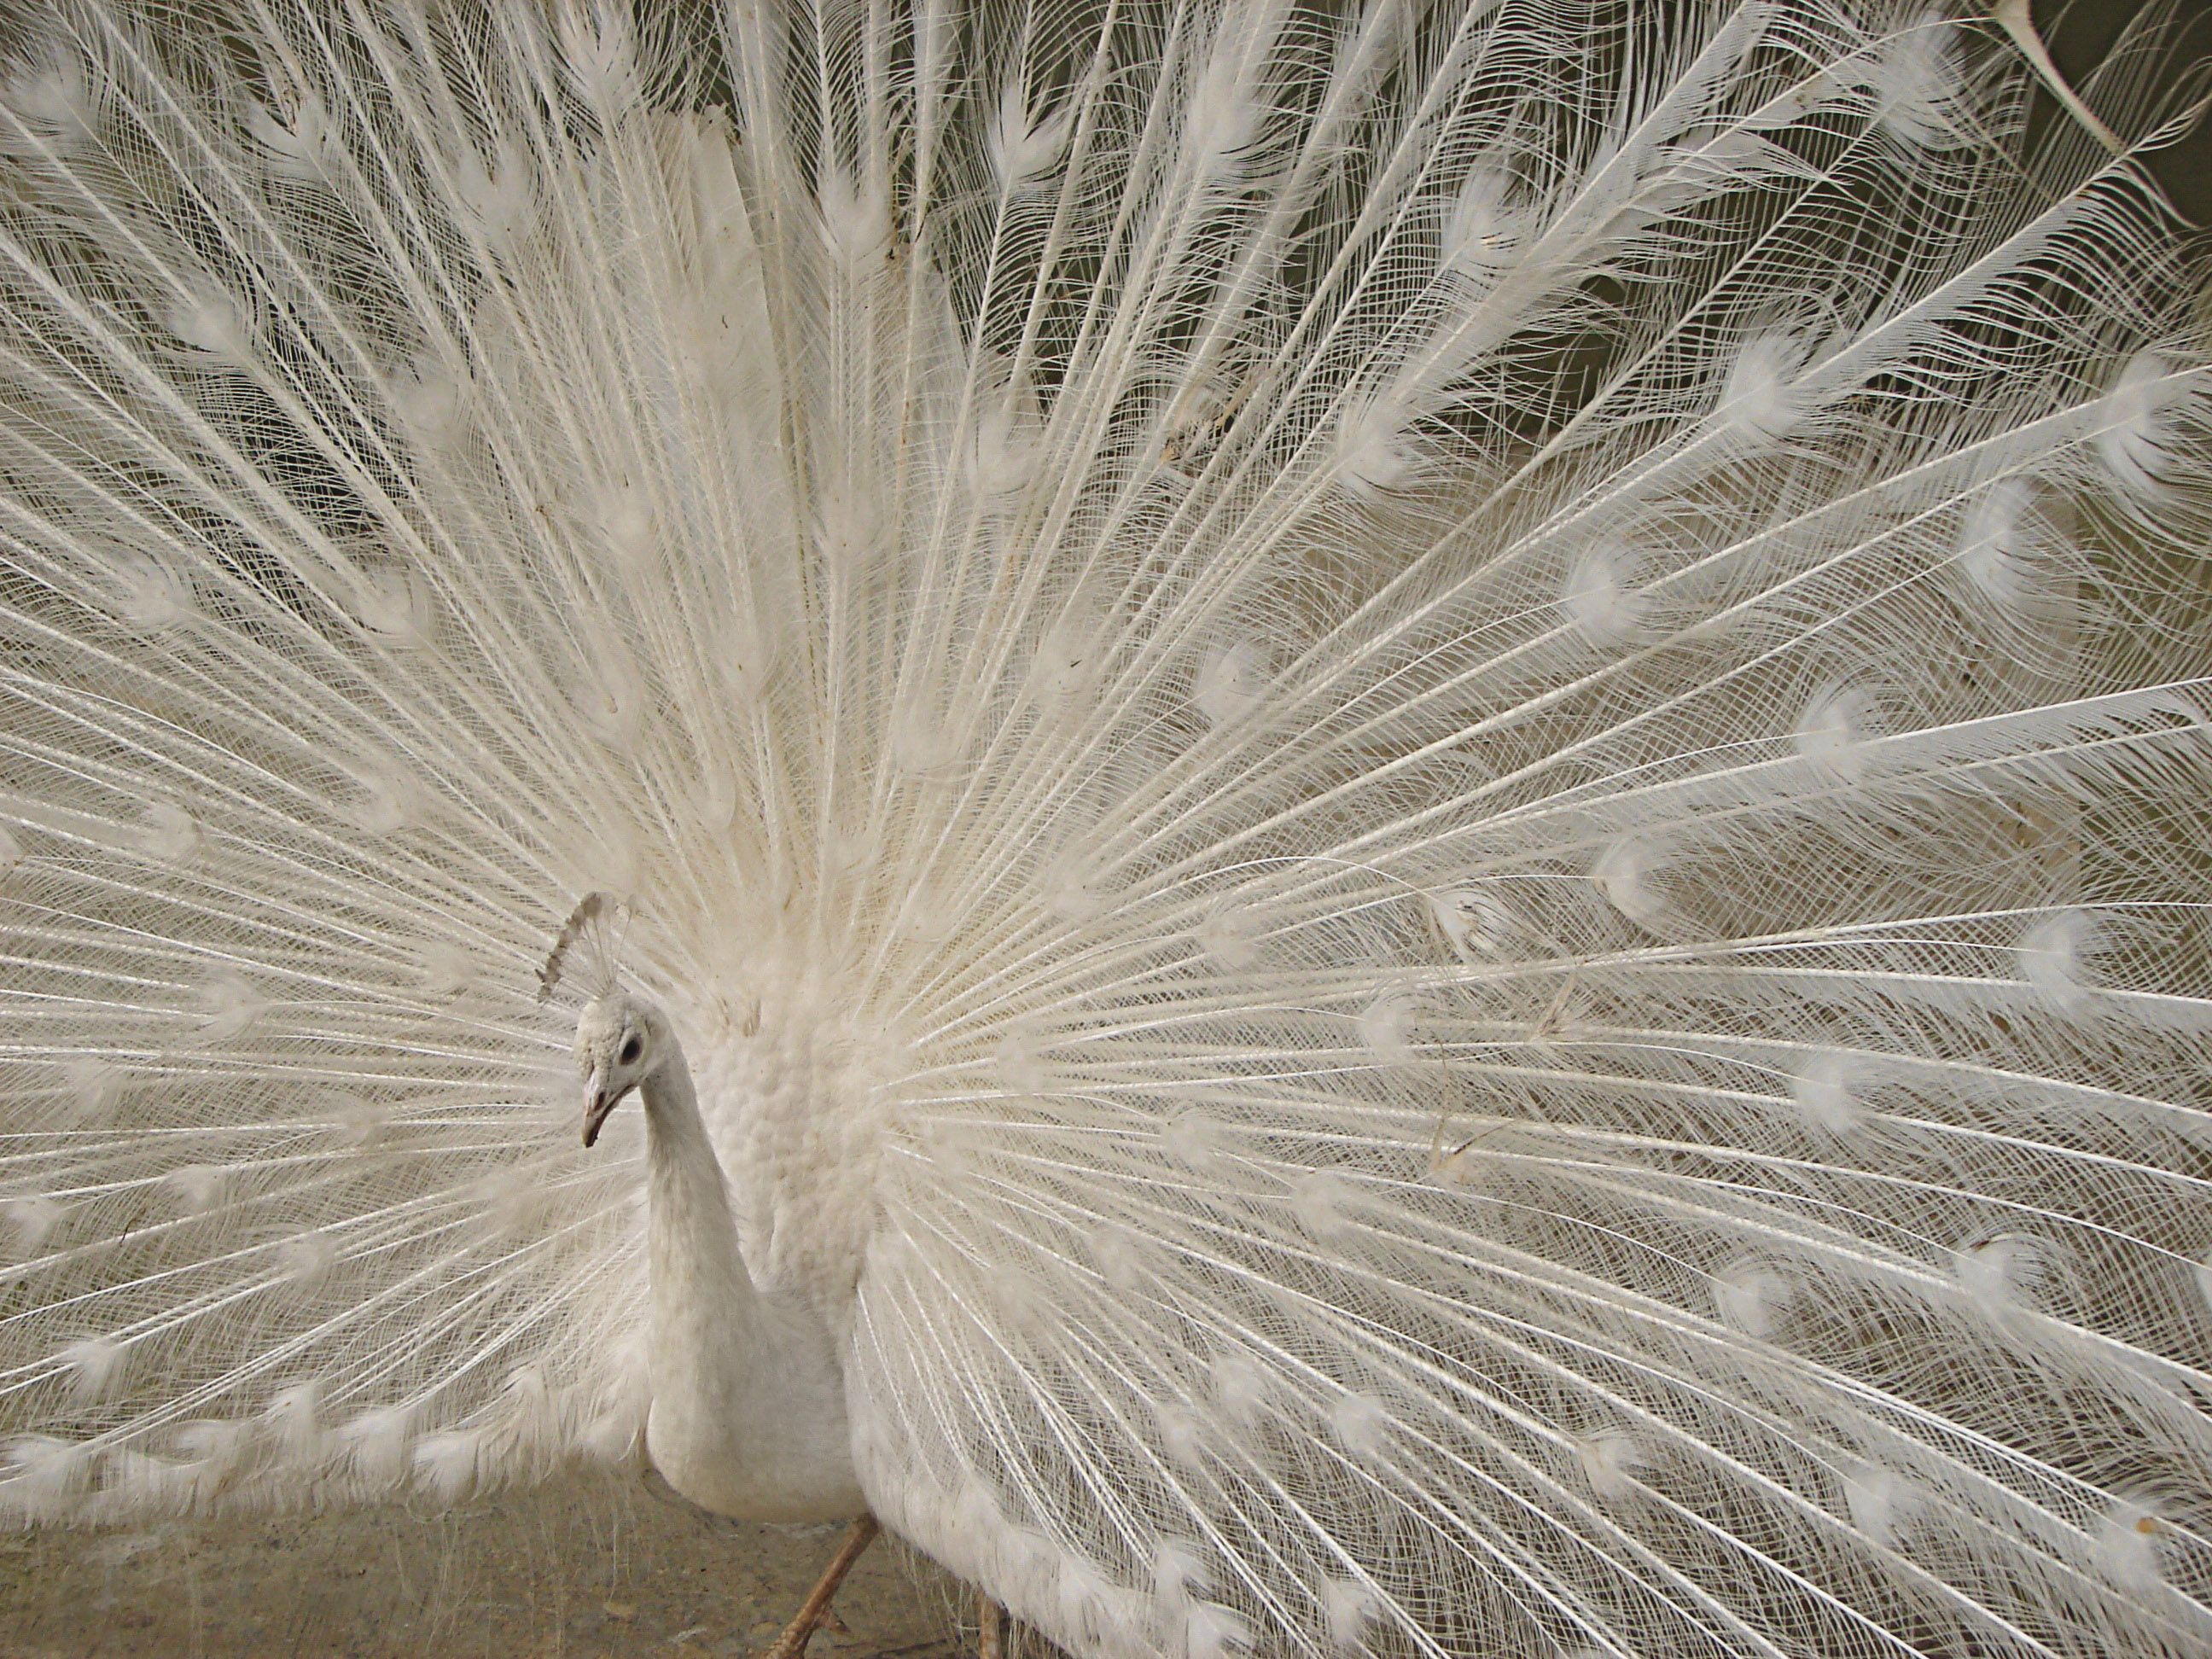 File:Peacock 00782.jpg - Wikimedia Commons | *